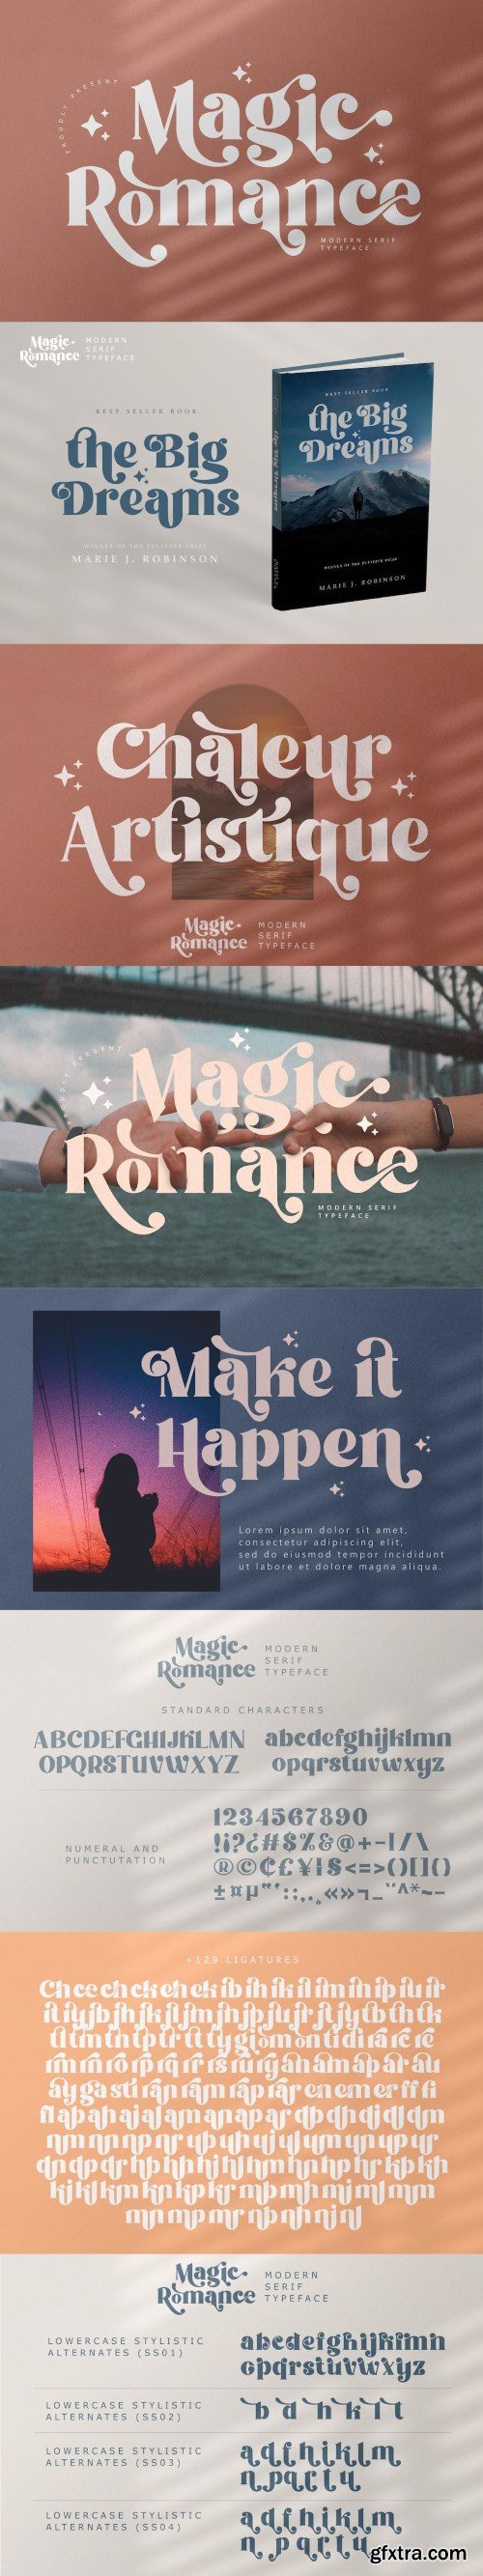 Magic Romance - modern and elegant serif font